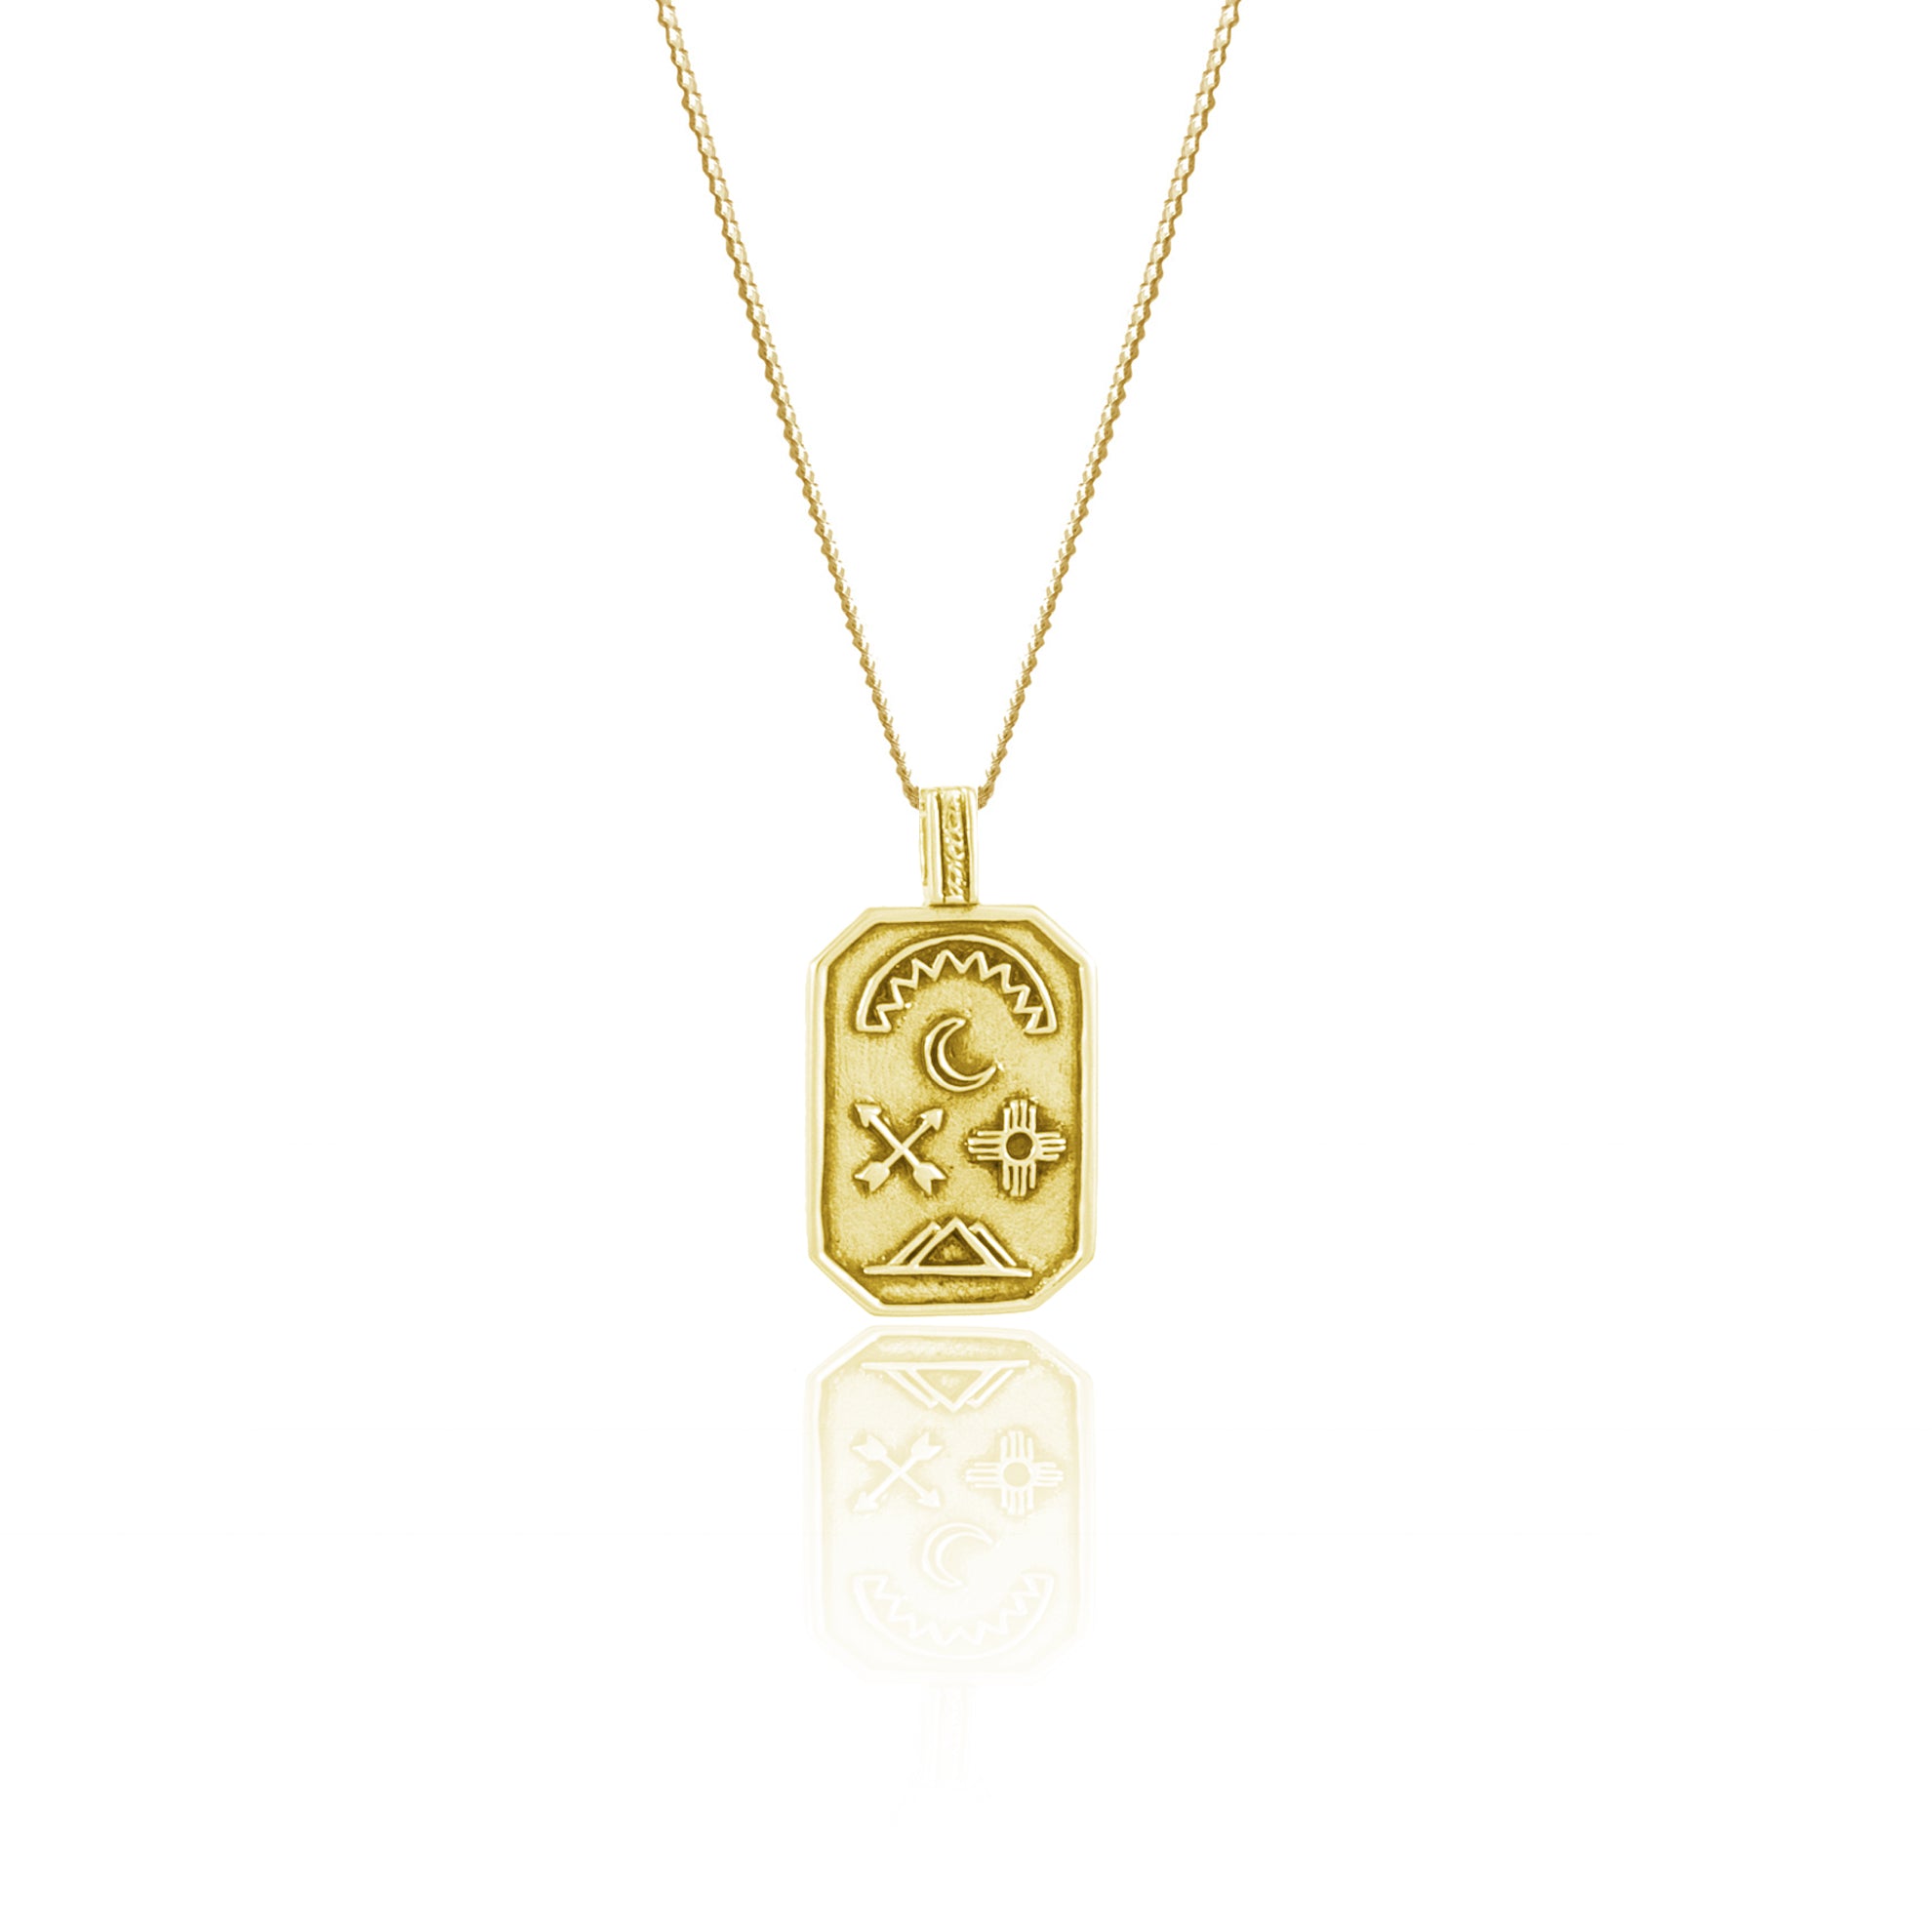 Power Pendant for Abundance Necklace - Gold